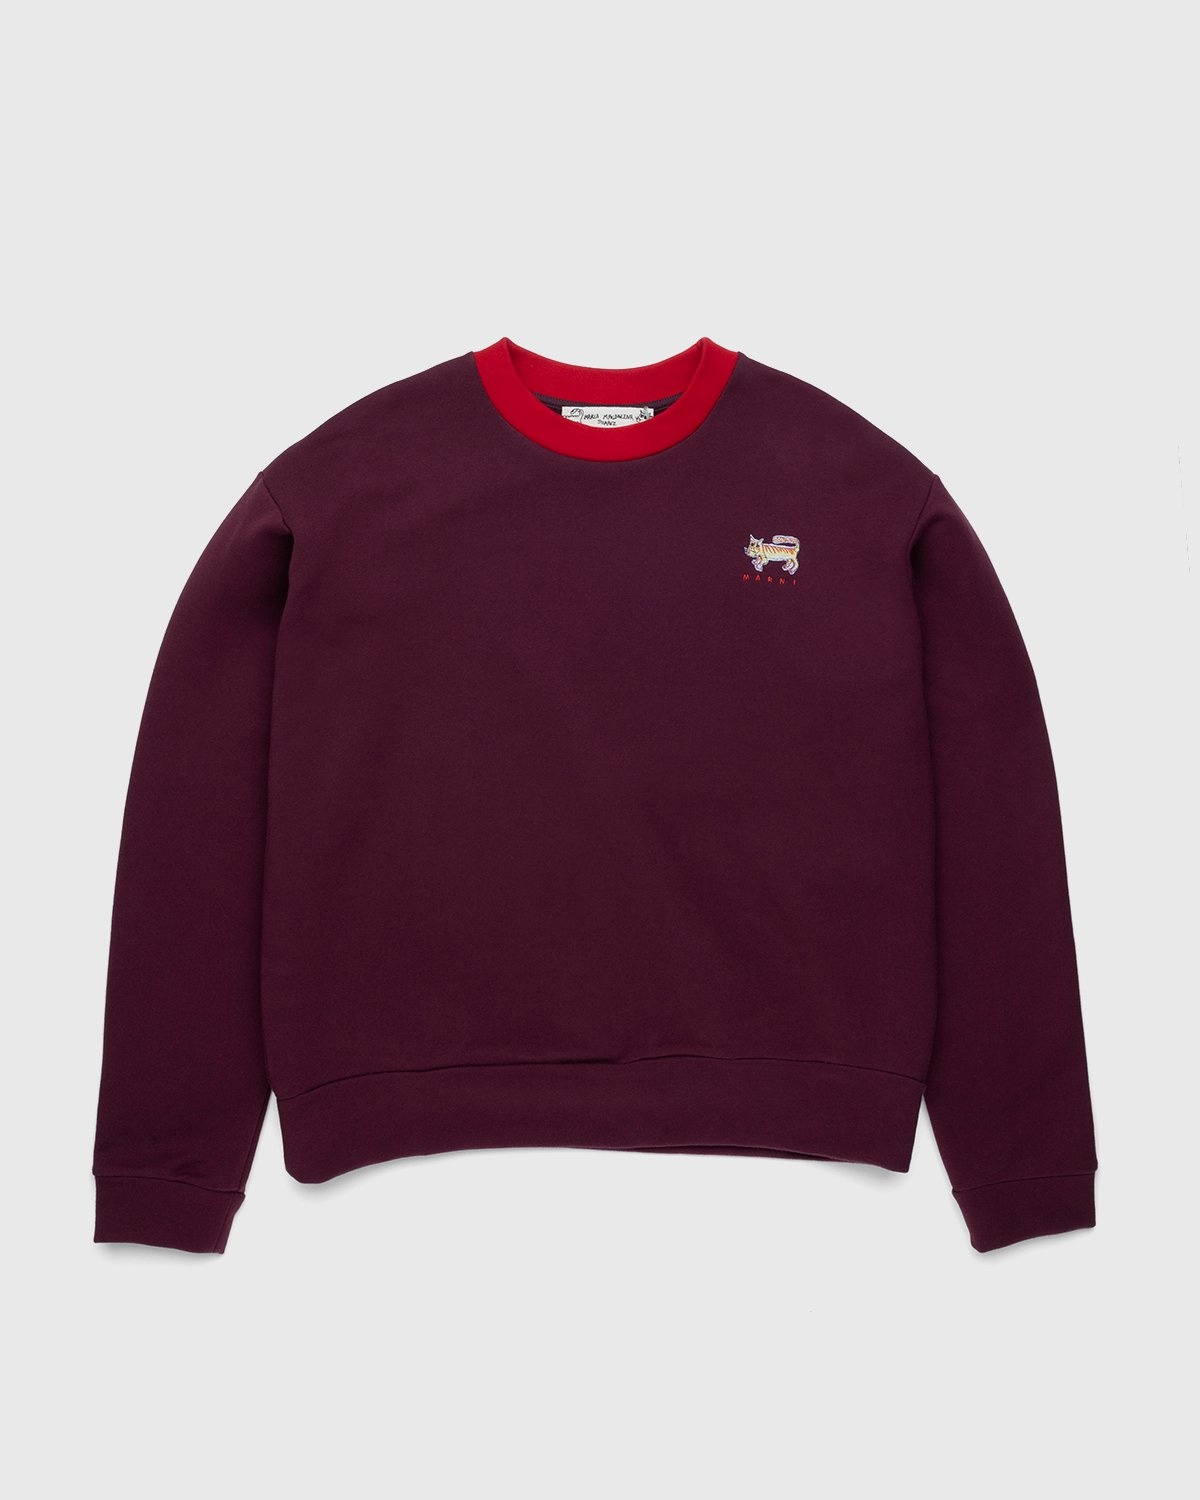 Marni – Logo-Embroidered Sweatshirt Burgundy - Sweatshirts - Red - Image 1